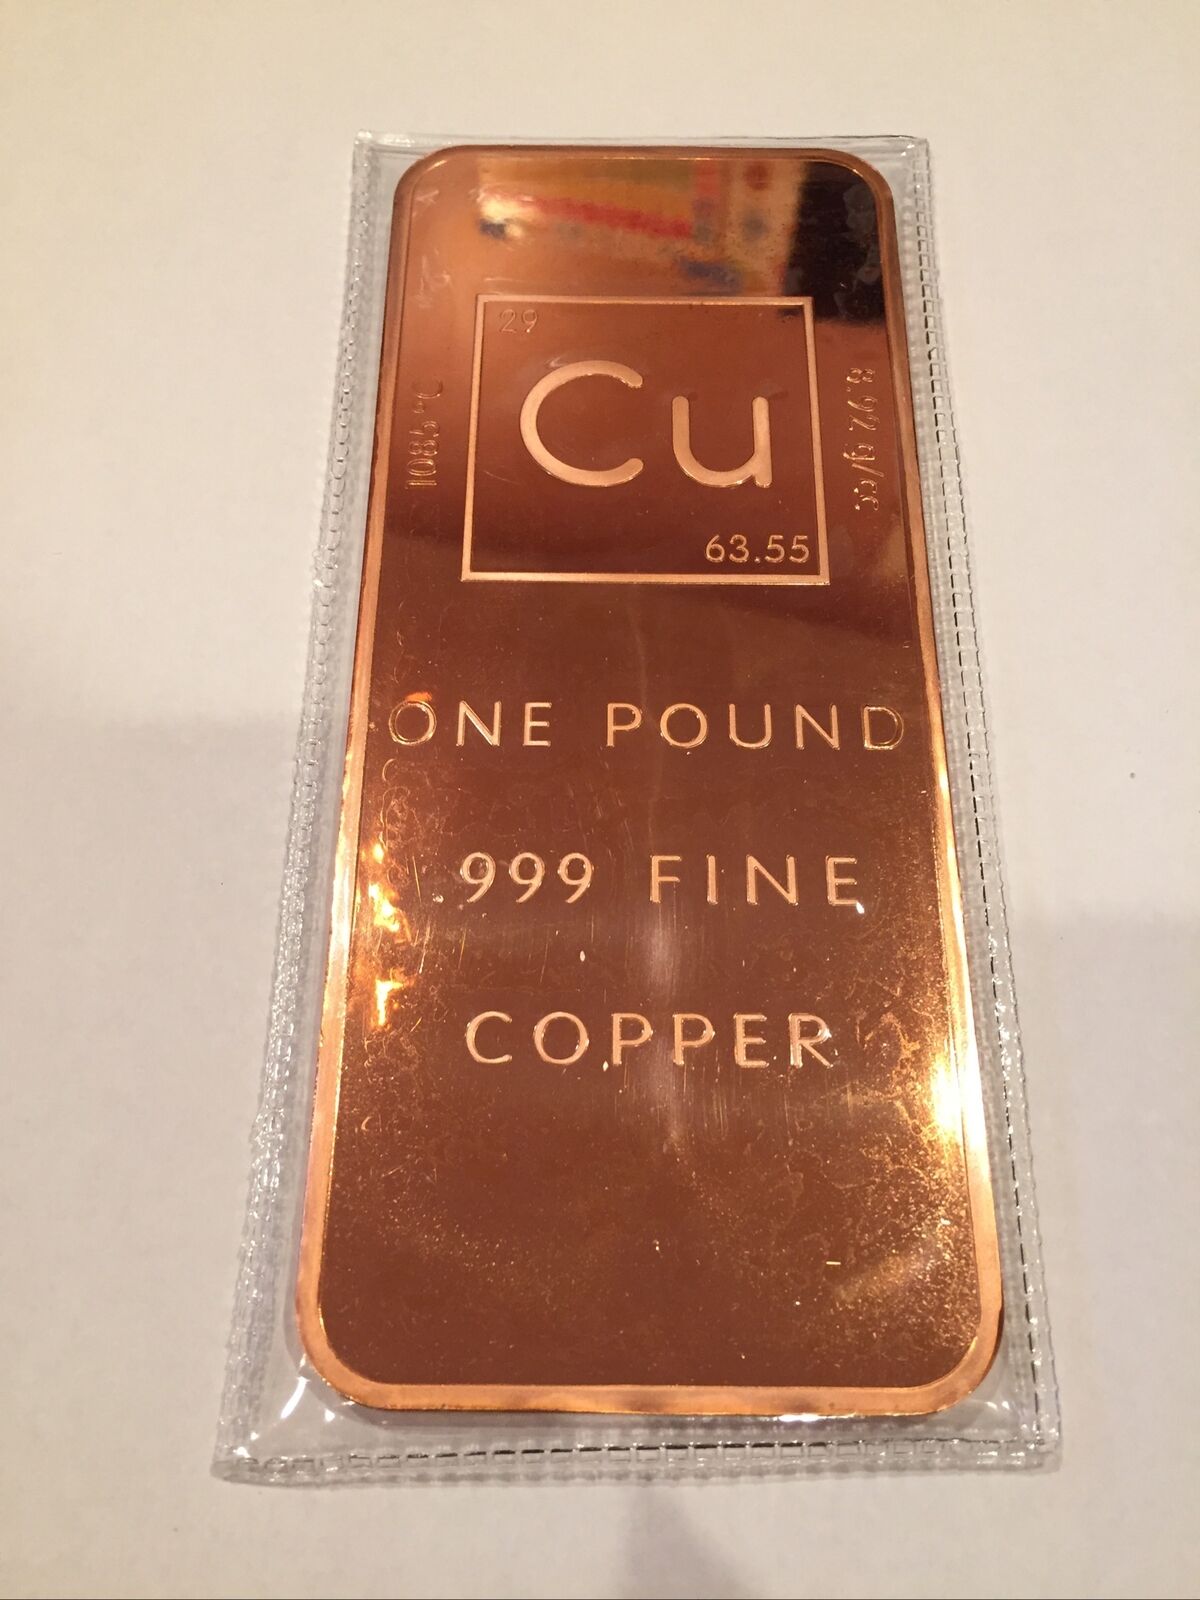 1 (One) Pound .999 Copper Bullion Bar By Unique Metals